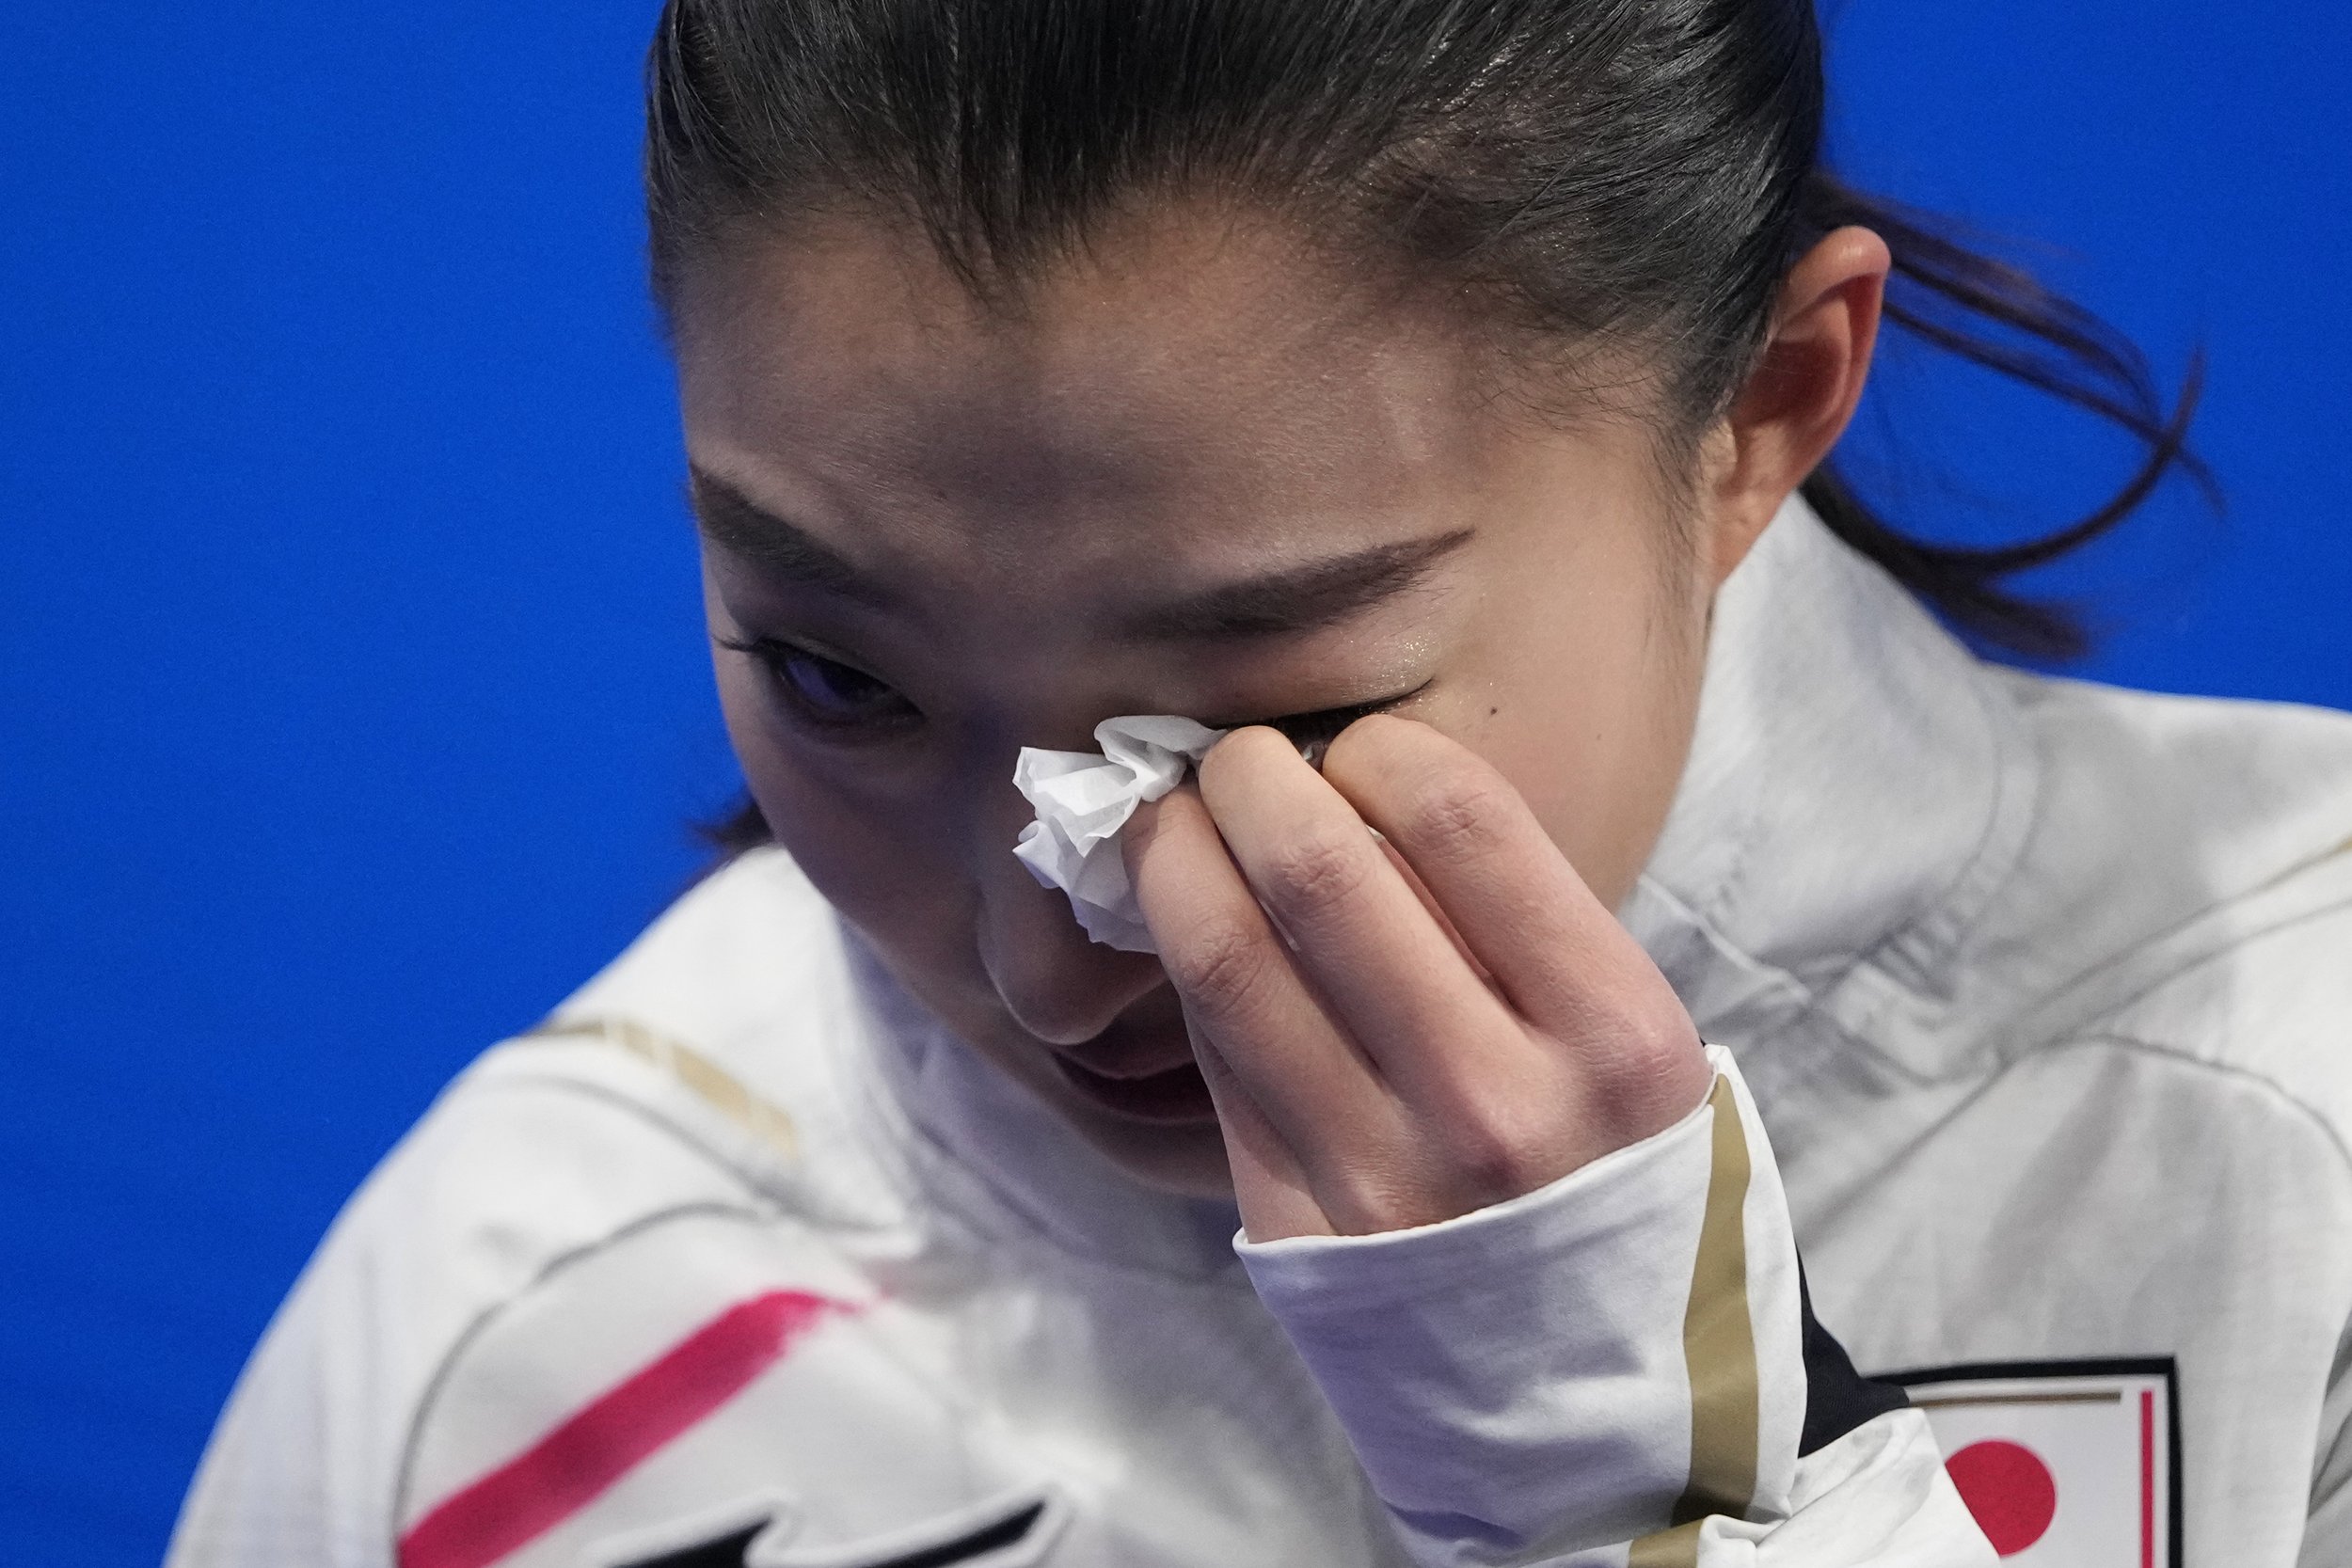  Kaori Sakamoto, of Japan, reacts after the women's short program during the figure skating at the 2022 Winter Olympics, Tuesday, Feb. 15, 2022, in Beijing. (AP Photo/Natacha Pisarenko) 